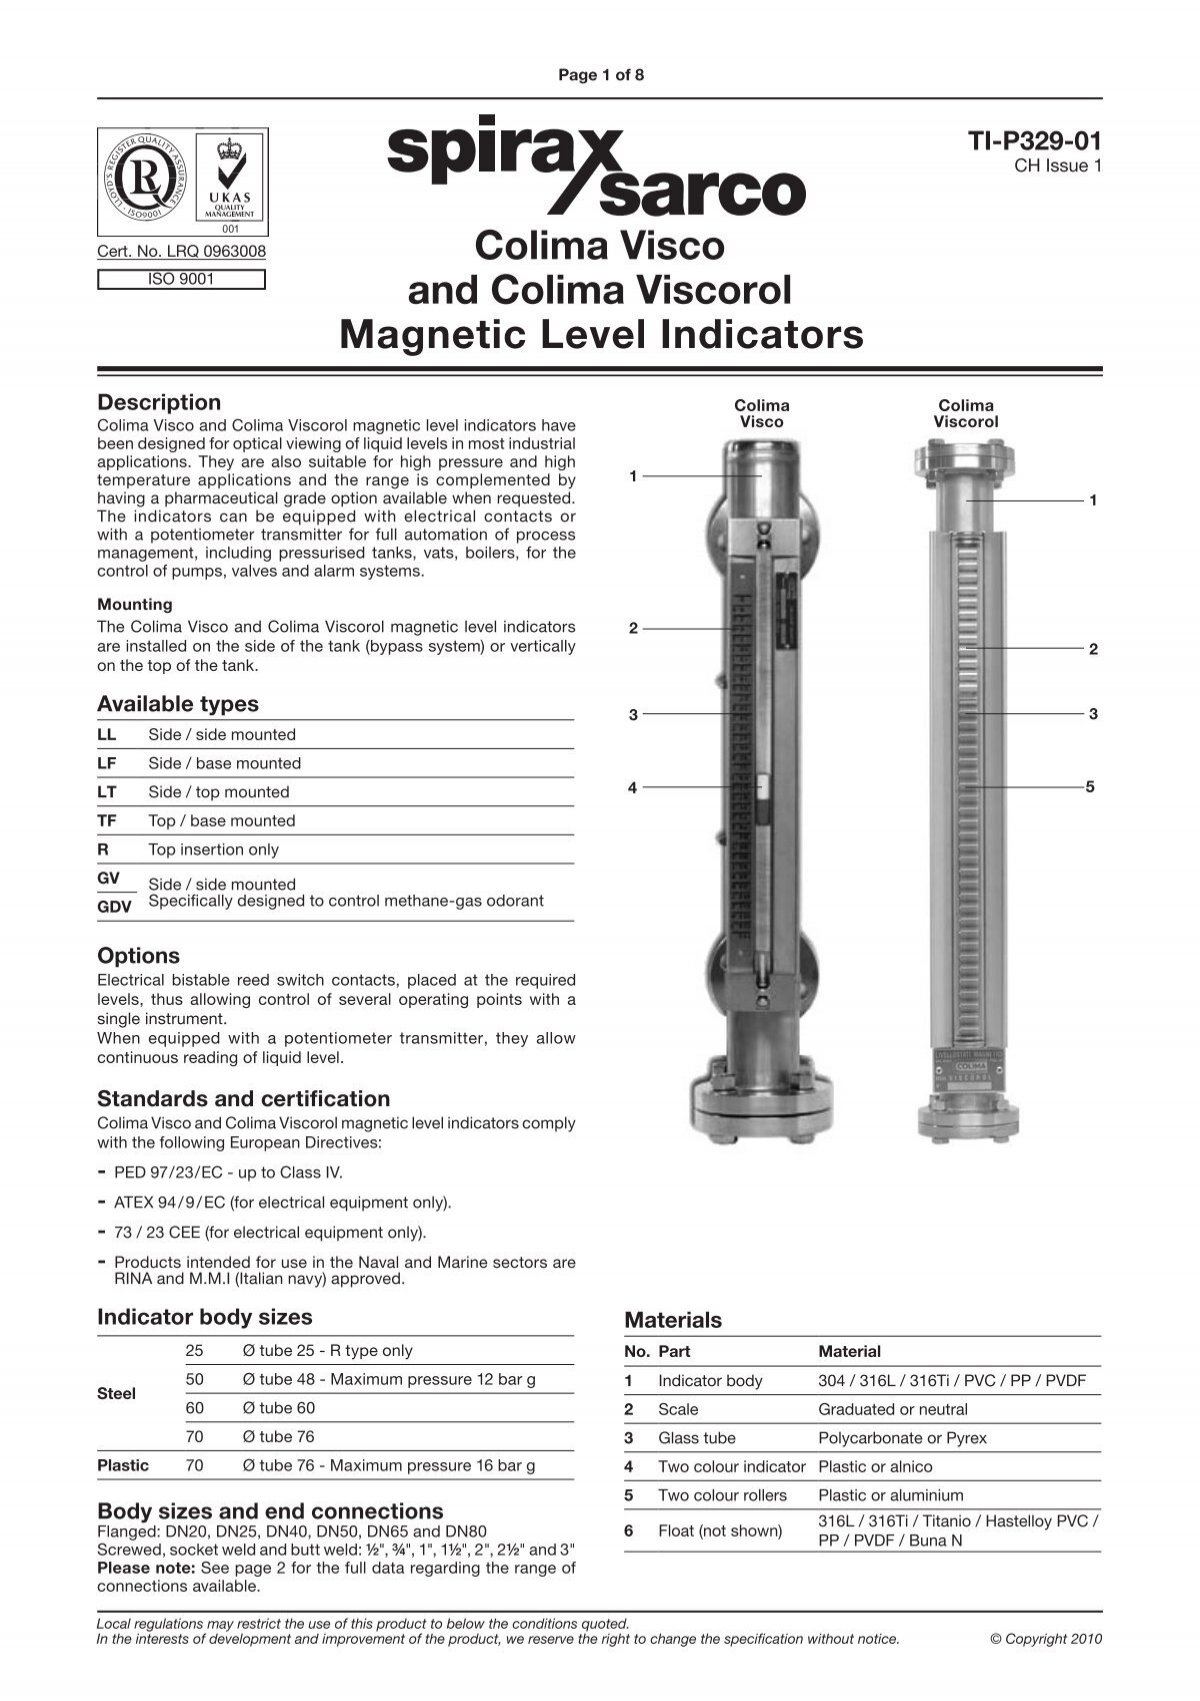 Colima Visco and Viscorol Magnetic level indicators - Spirax Sarco